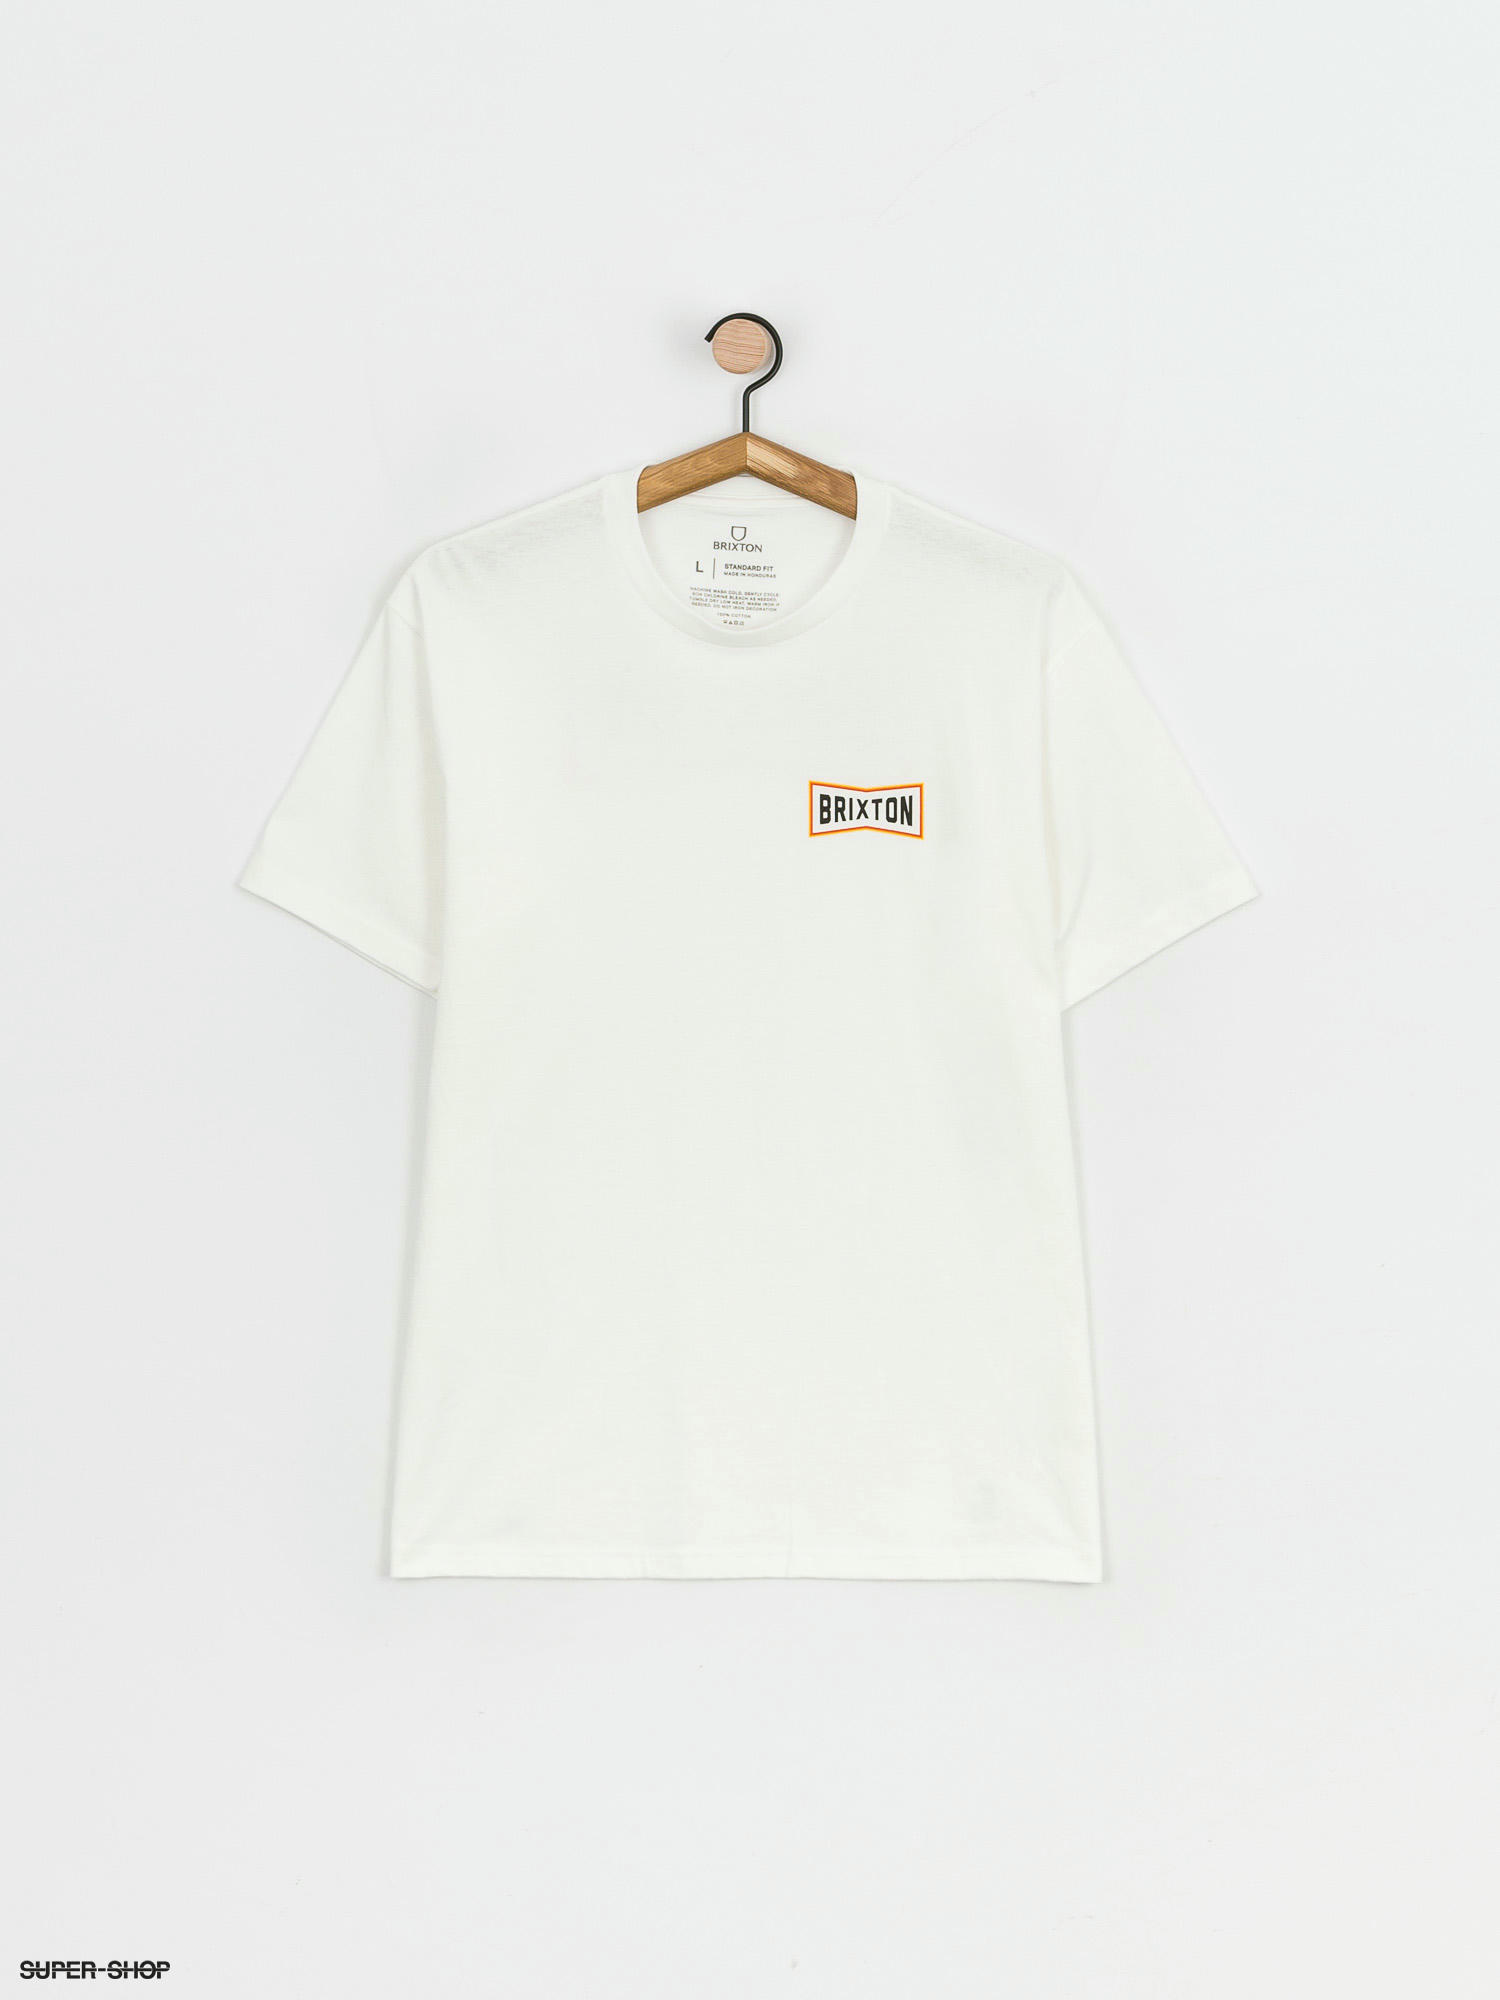 Brixton Truss Stt T-shirt (white)